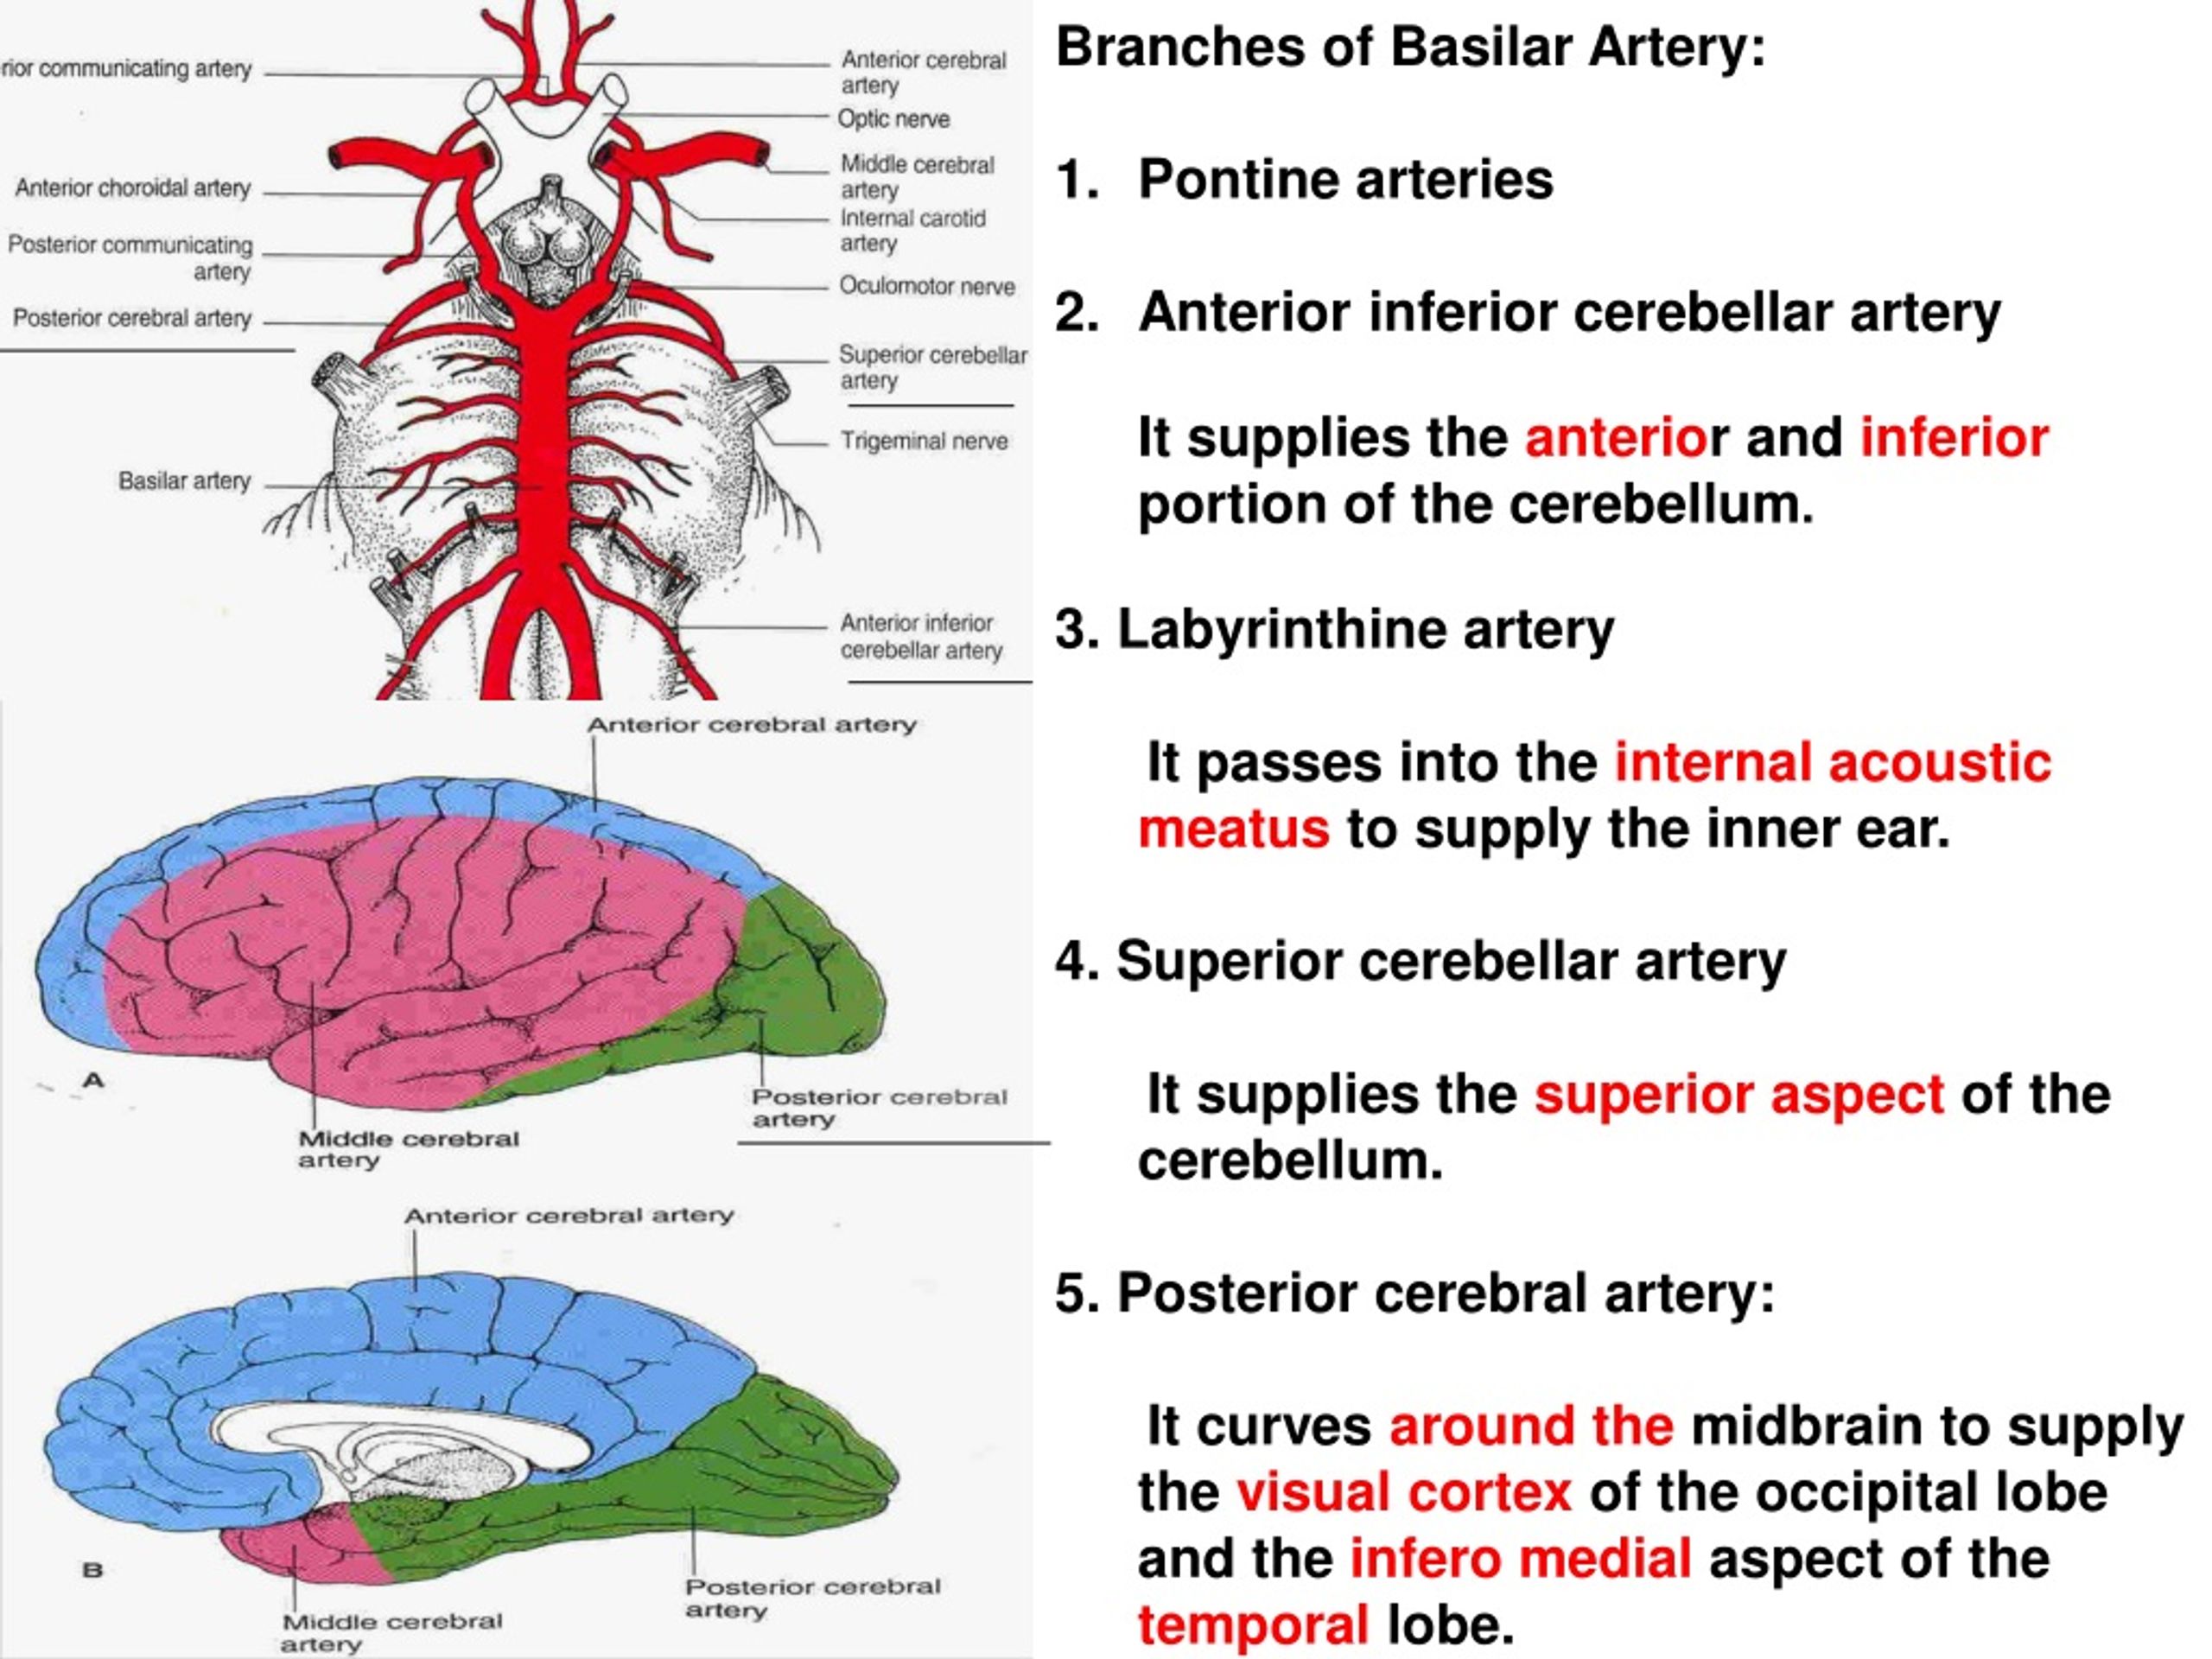 PPT - Blood Supply of the Brain 1- Internal carotid arteries PowerPoint ...